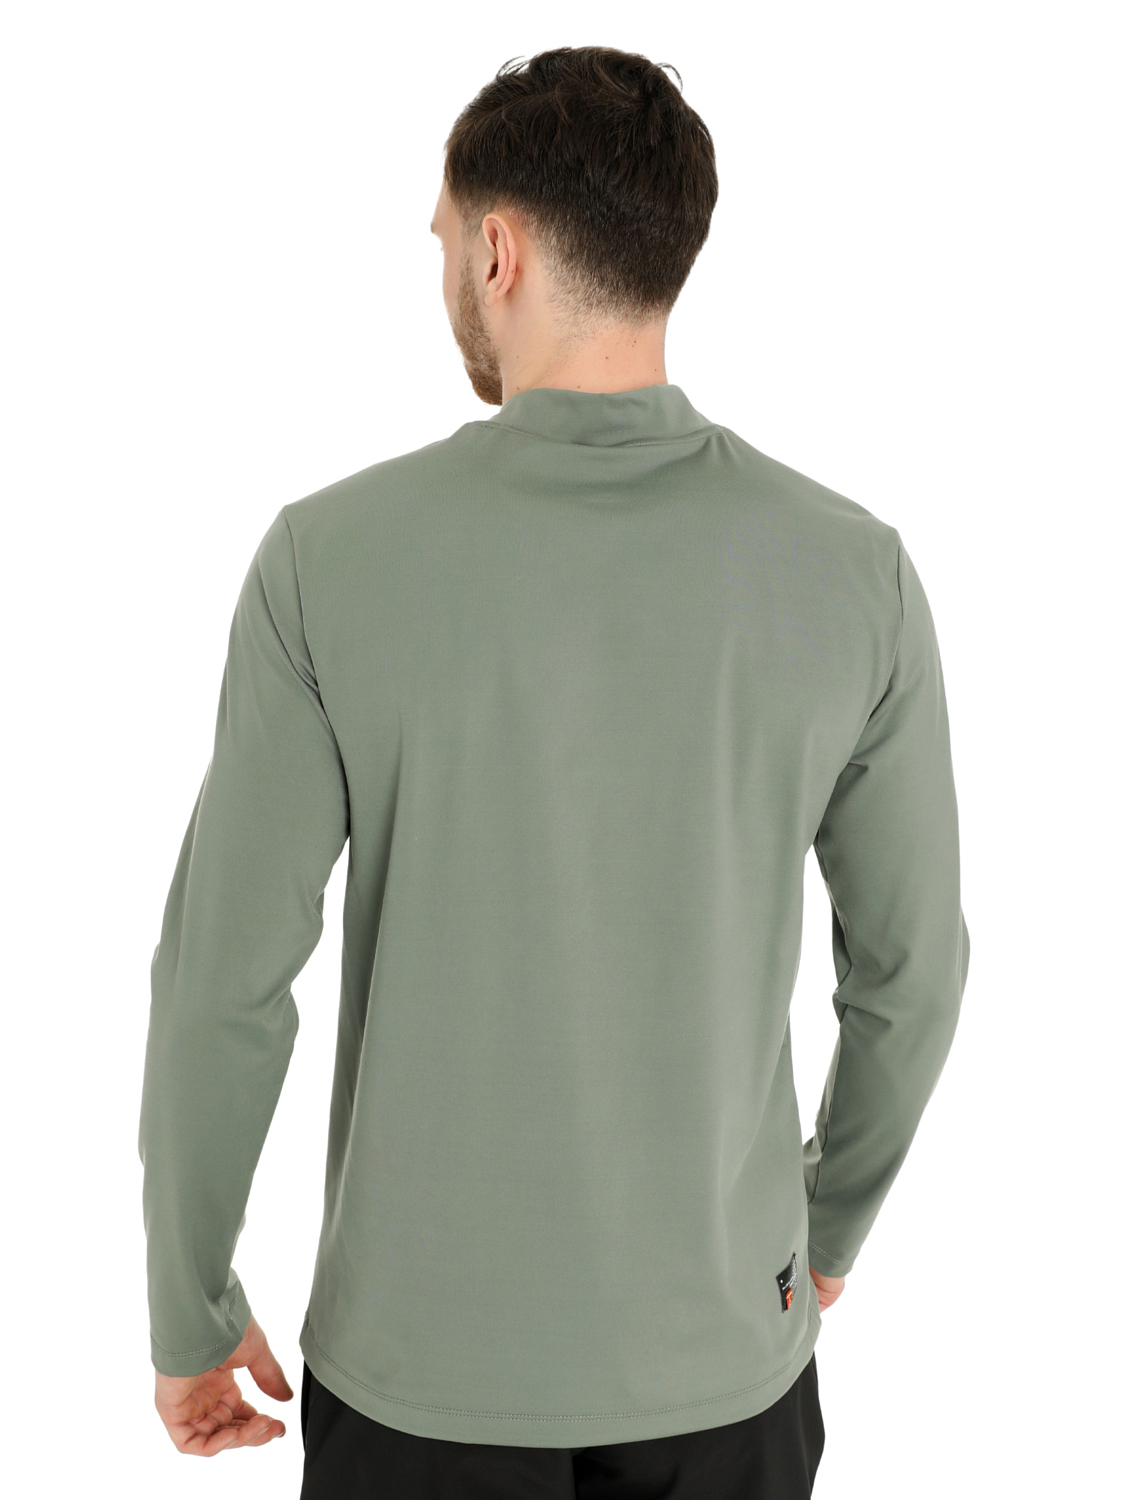 Футболка с длинным рукавом Toread Men's long-sleeve T-shirt Grey lake green